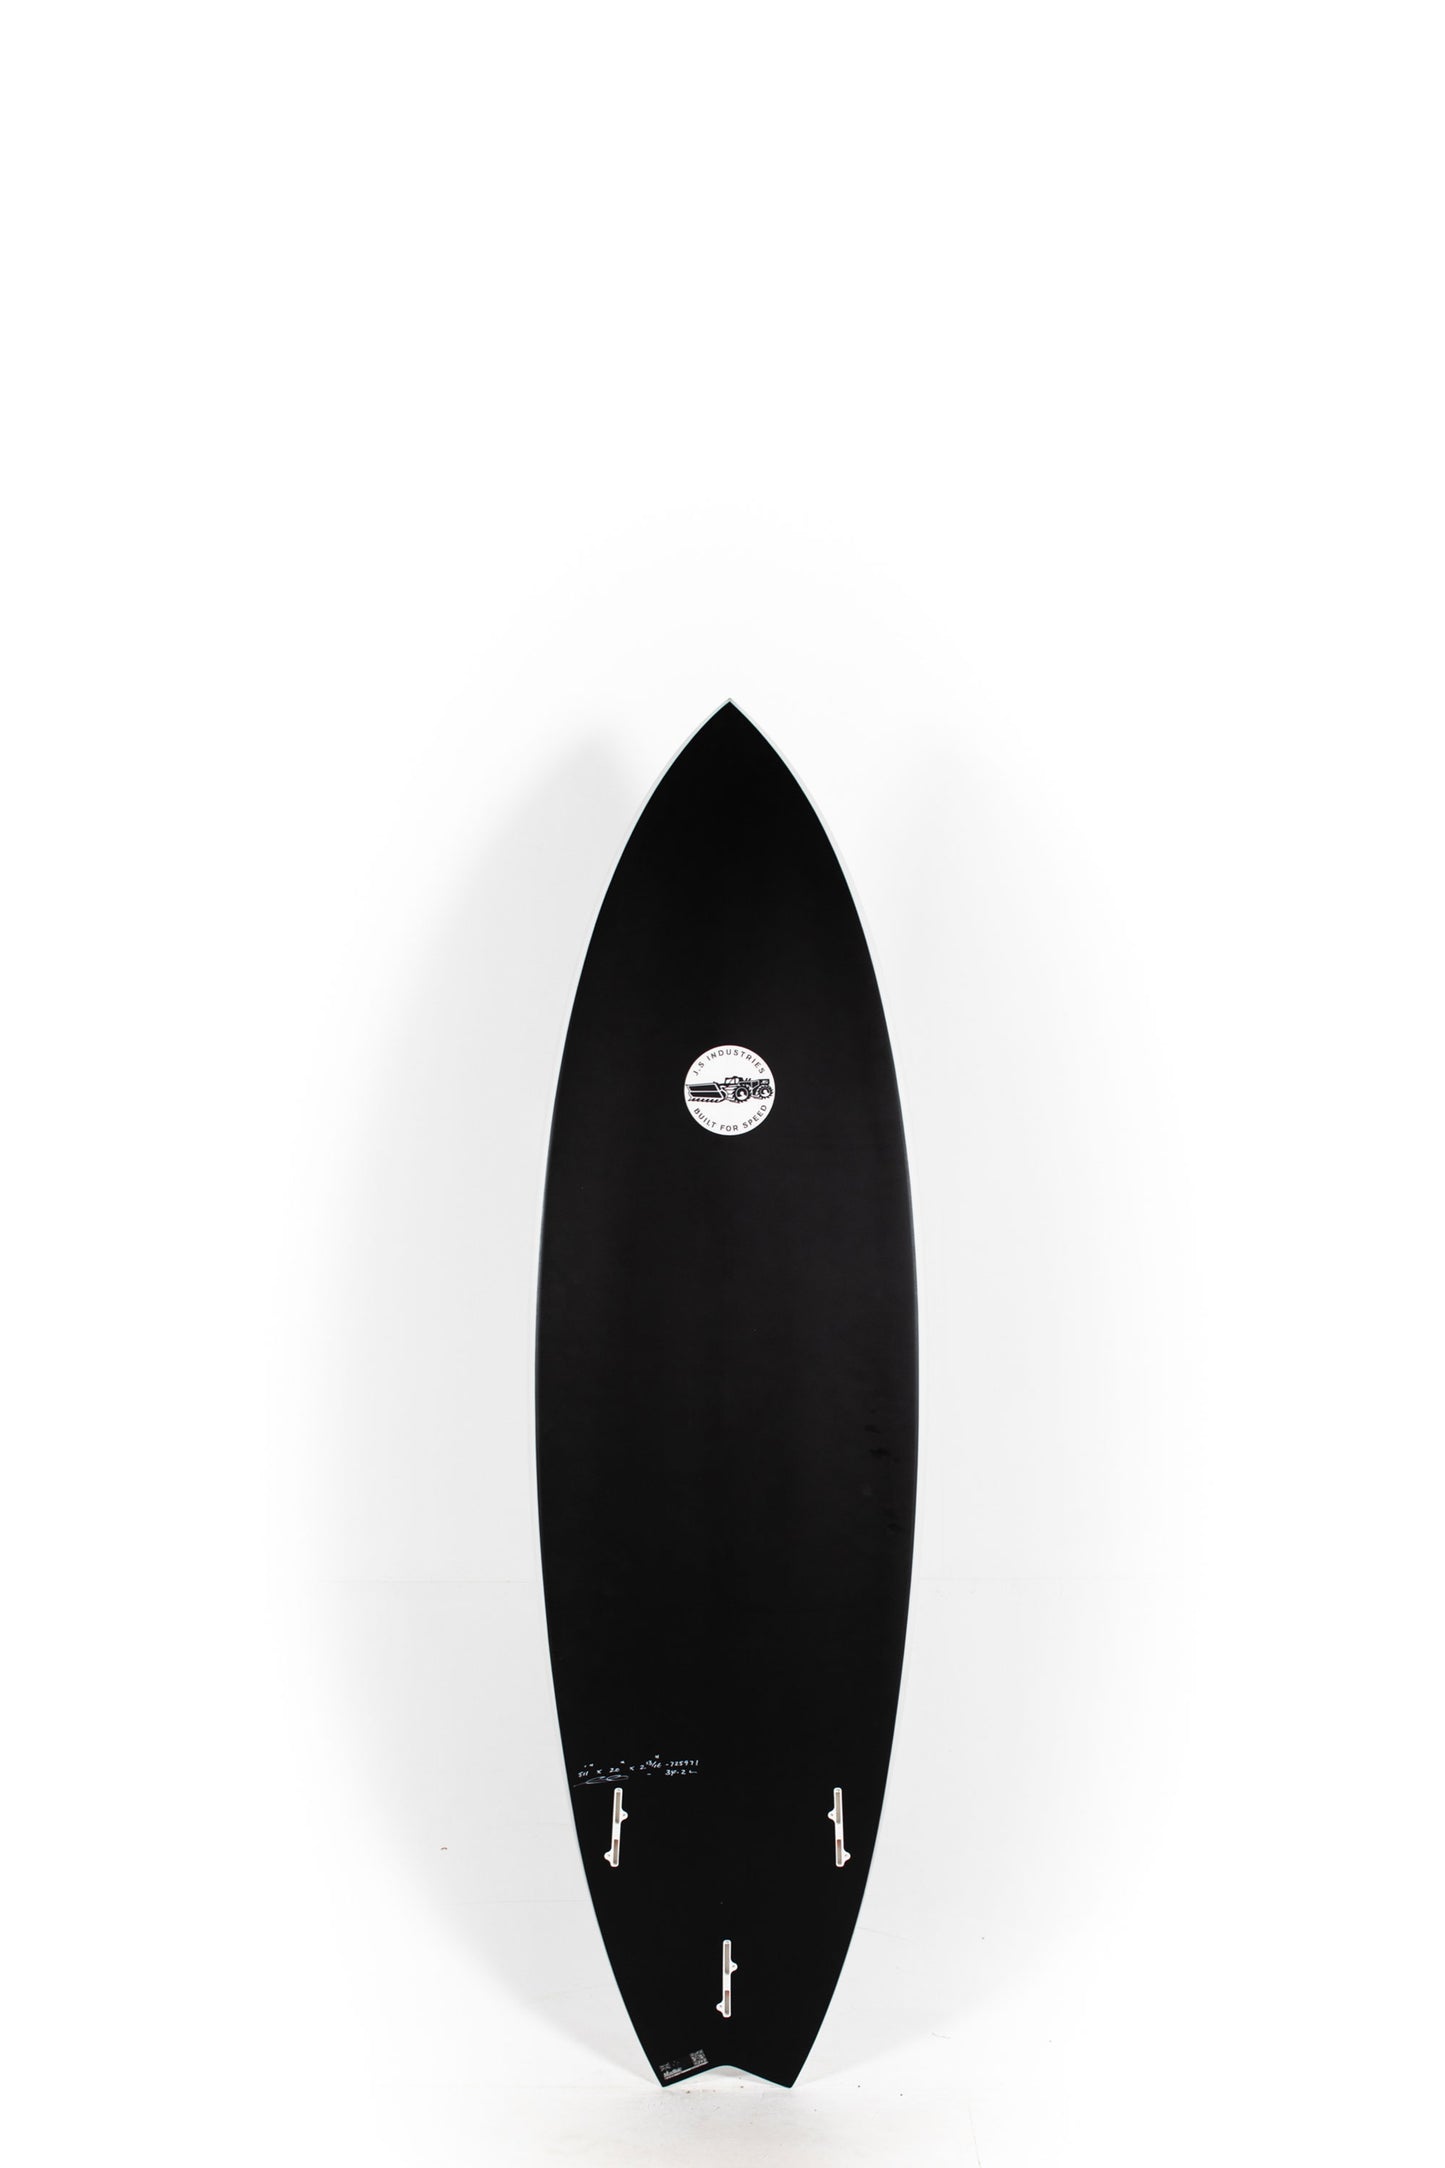 Pukas Surf Shop - JS Surfboards - BLACK BARON 2.1 - 5'11" x 19,75 x 2,81 x 33,8L - BLACKBARON2.1